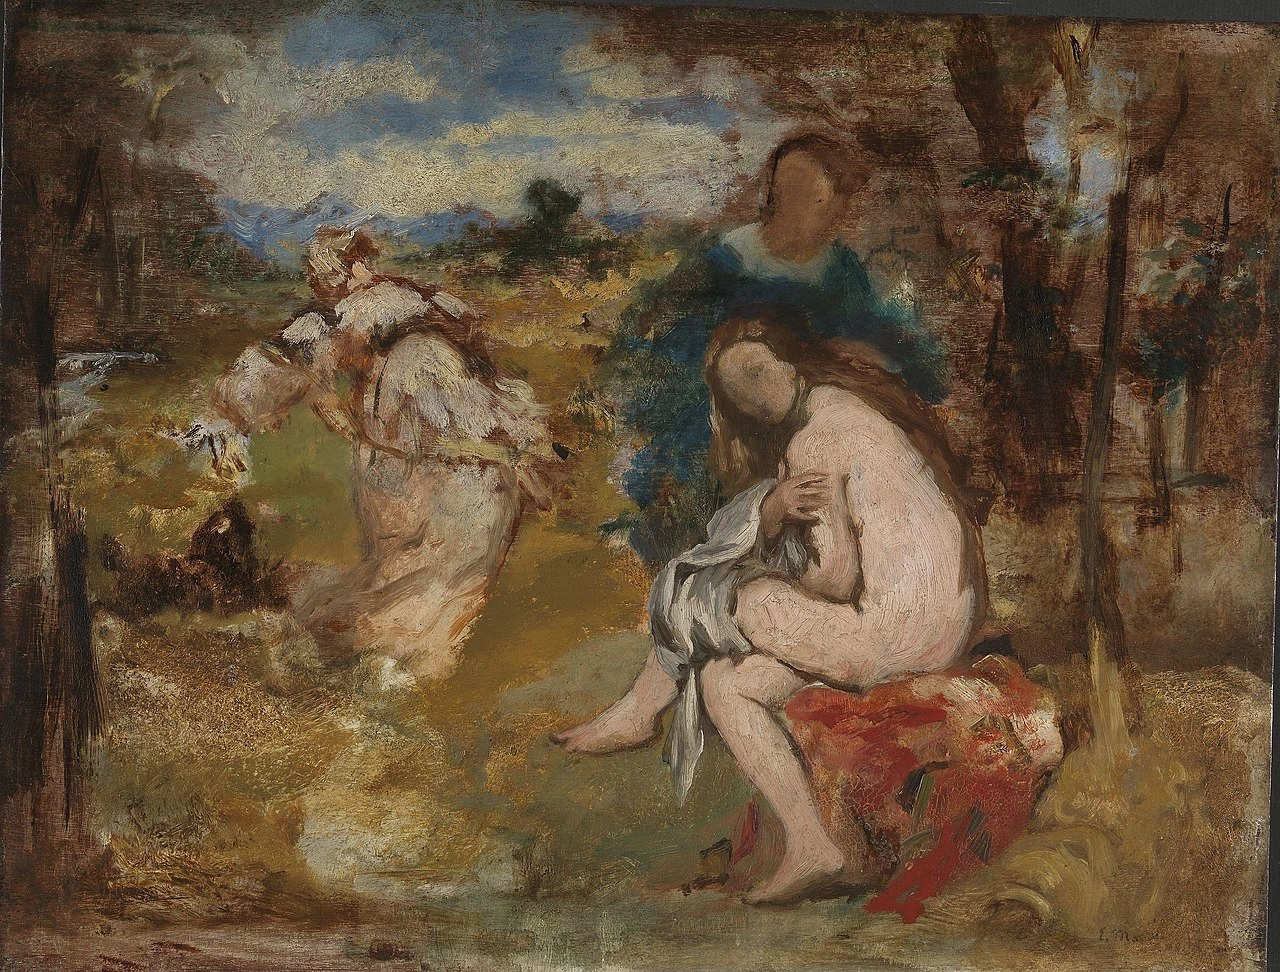  184-Édouard Manet, La ninfa sorpresa, 1860-National Museum of Art, Architecture and Design 